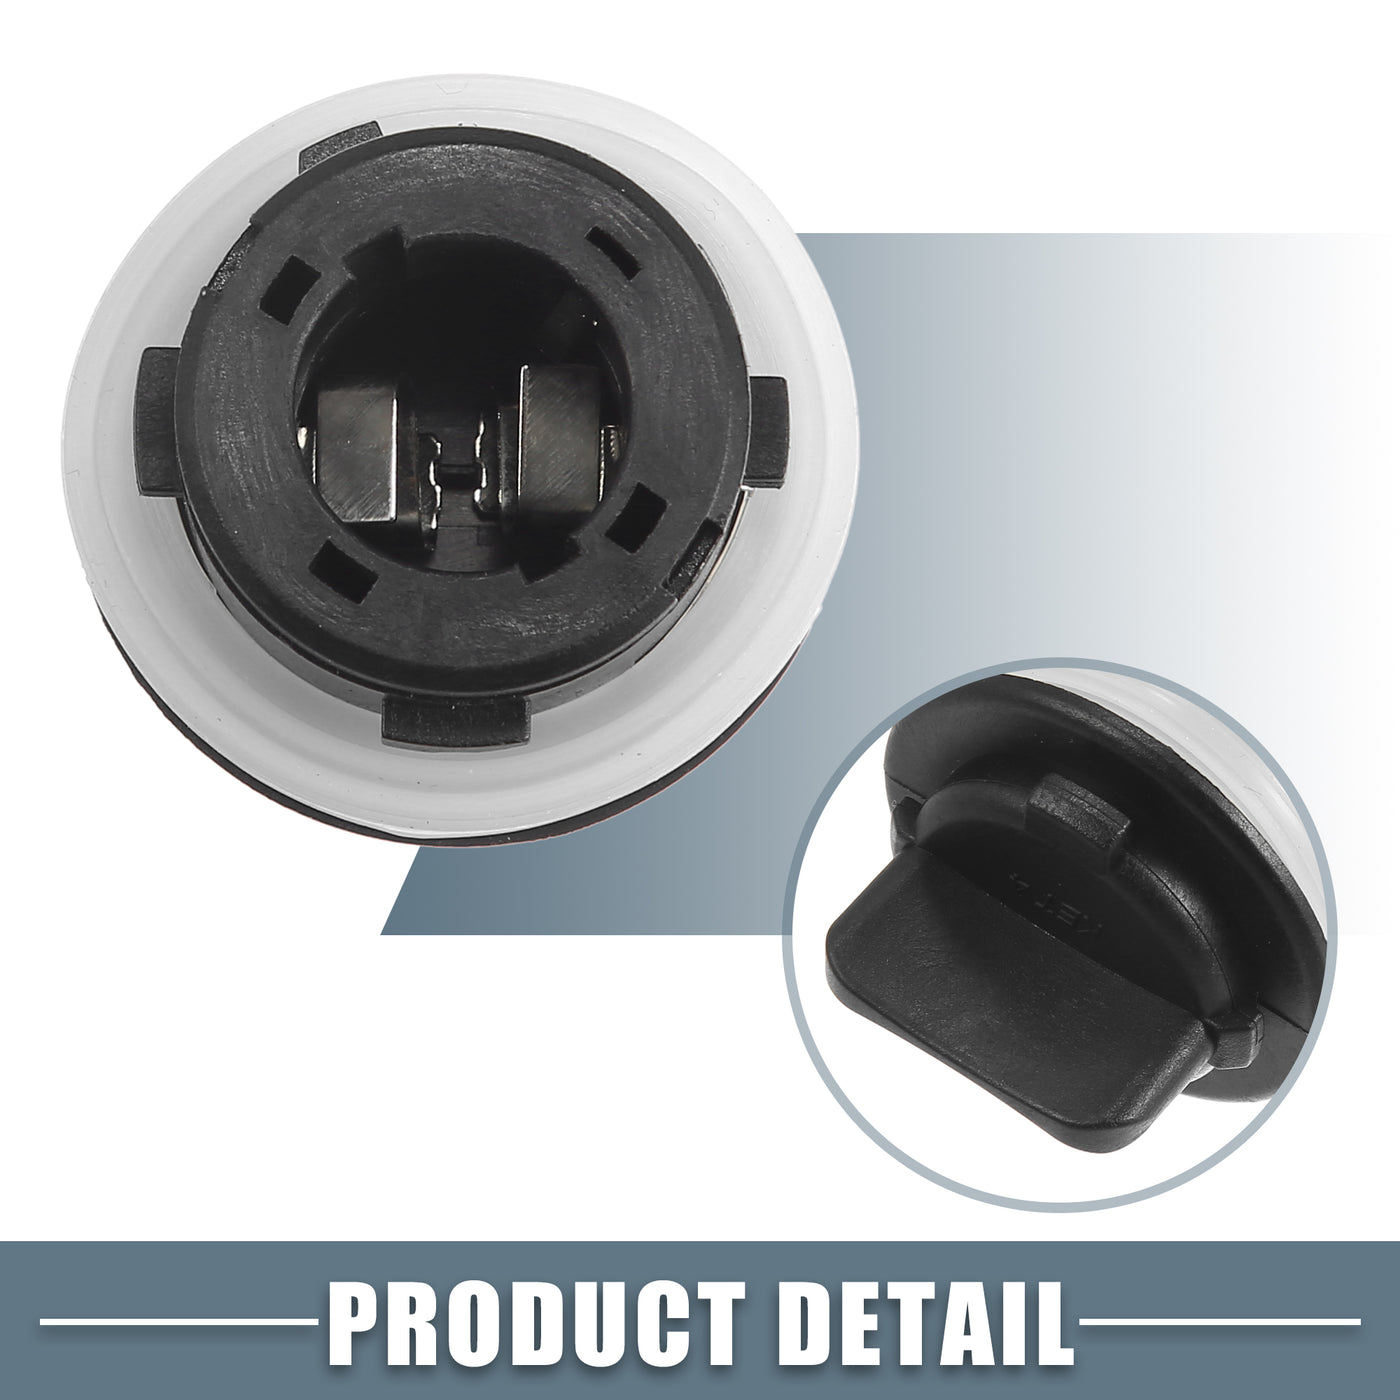 A ABSOPRO Front Left Right Turn Signal Light Bulb Socket Holder 92166-3K000 921663K000 for Hyundai Accent 2012-2017 Plastic Black